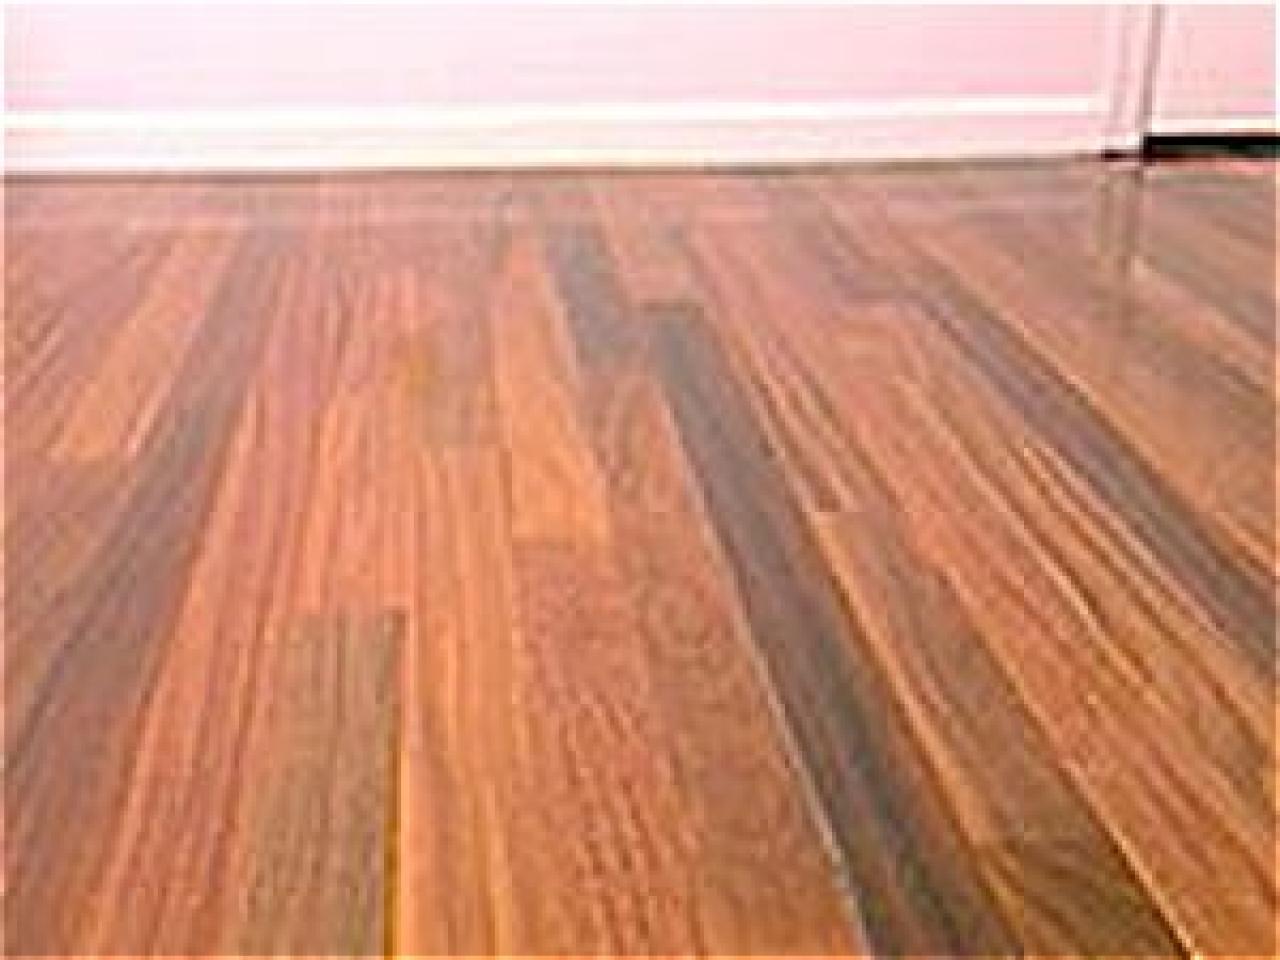 Types Of Hardwood Flooring Diy, Cleaner Approved For Aluminum Oxide Coated Hardwood Floors